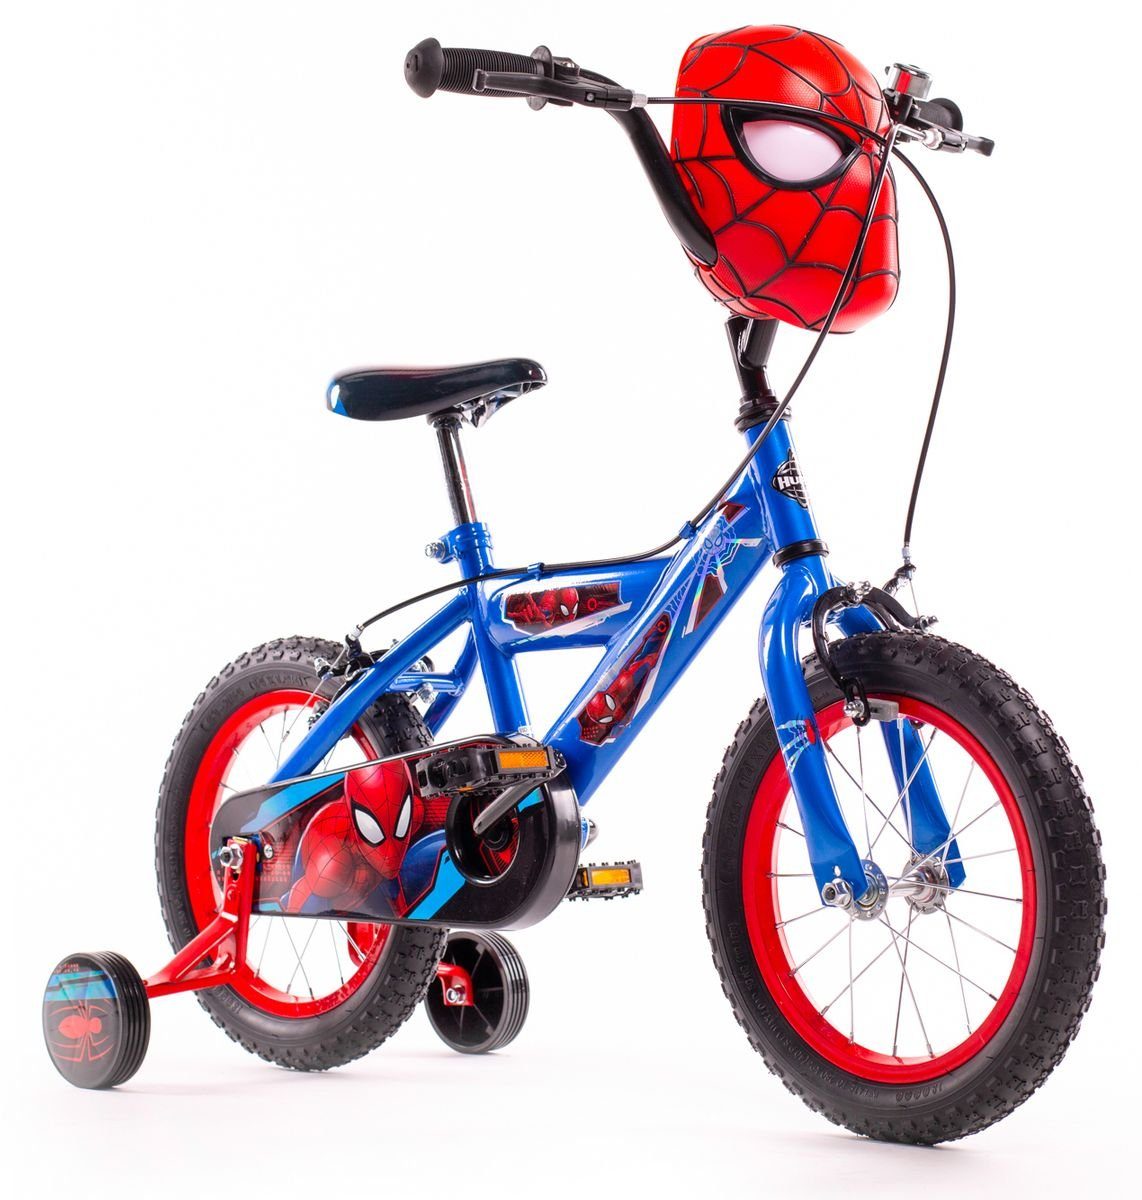 14" 14 Zoll Disney Kinder Fahrrad Kinderfahrrad Jungenfahrrad Rad Bike Batman 14 